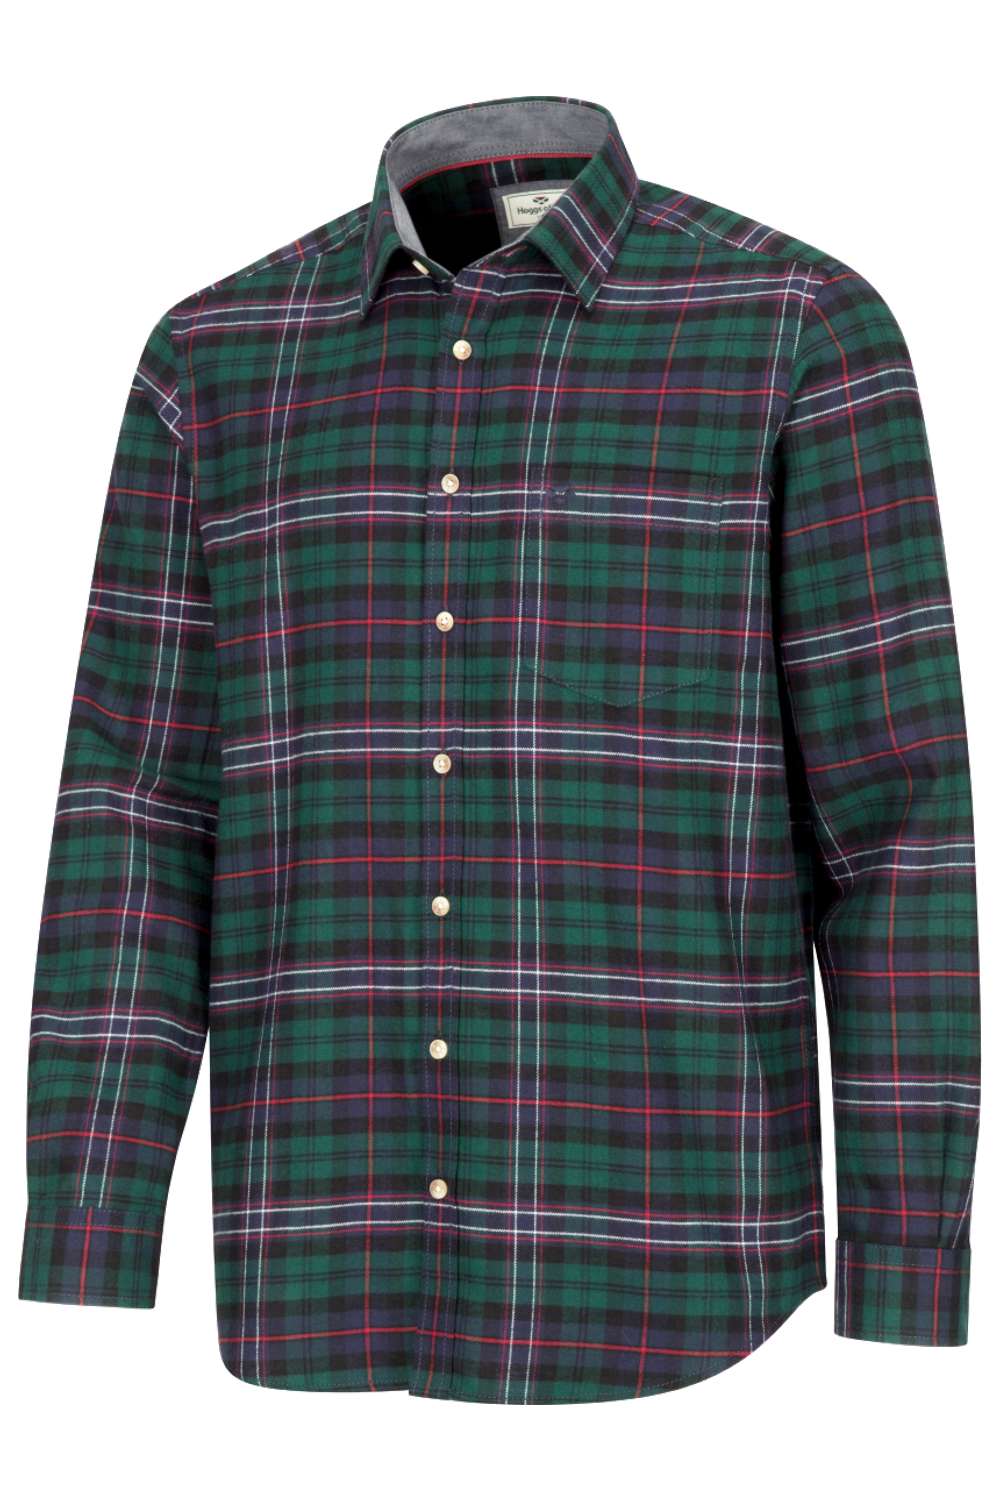 Hoggs of Fife Pitscottie Flannel Shirt- Dark Green Tartan Check 